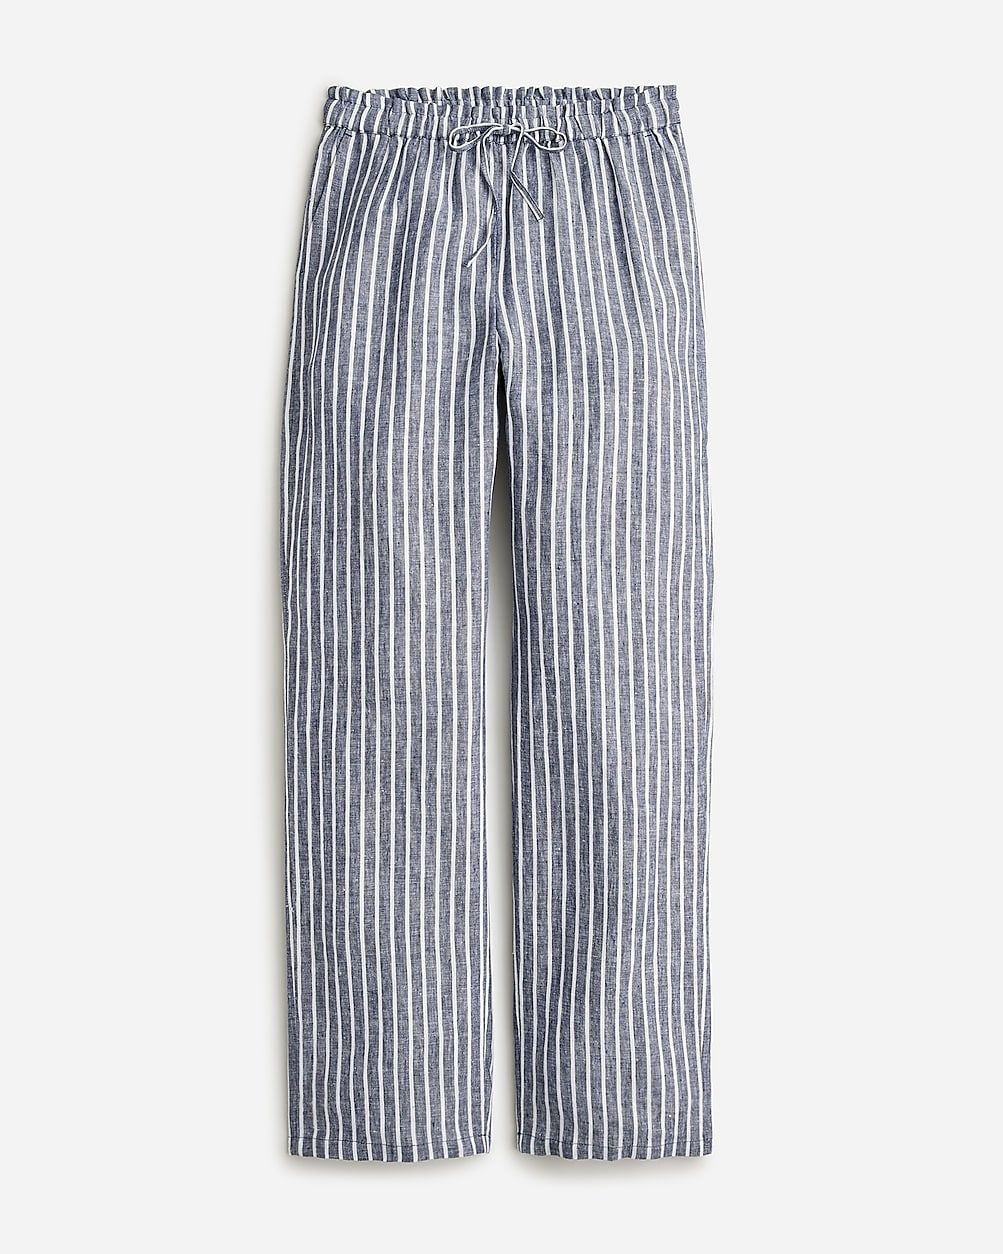 Shop this lookbest seller4.3(141 REVIEWS)Soleil pant in striped linen$98.00Dark Evening$98.00$98.... | J.Crew US